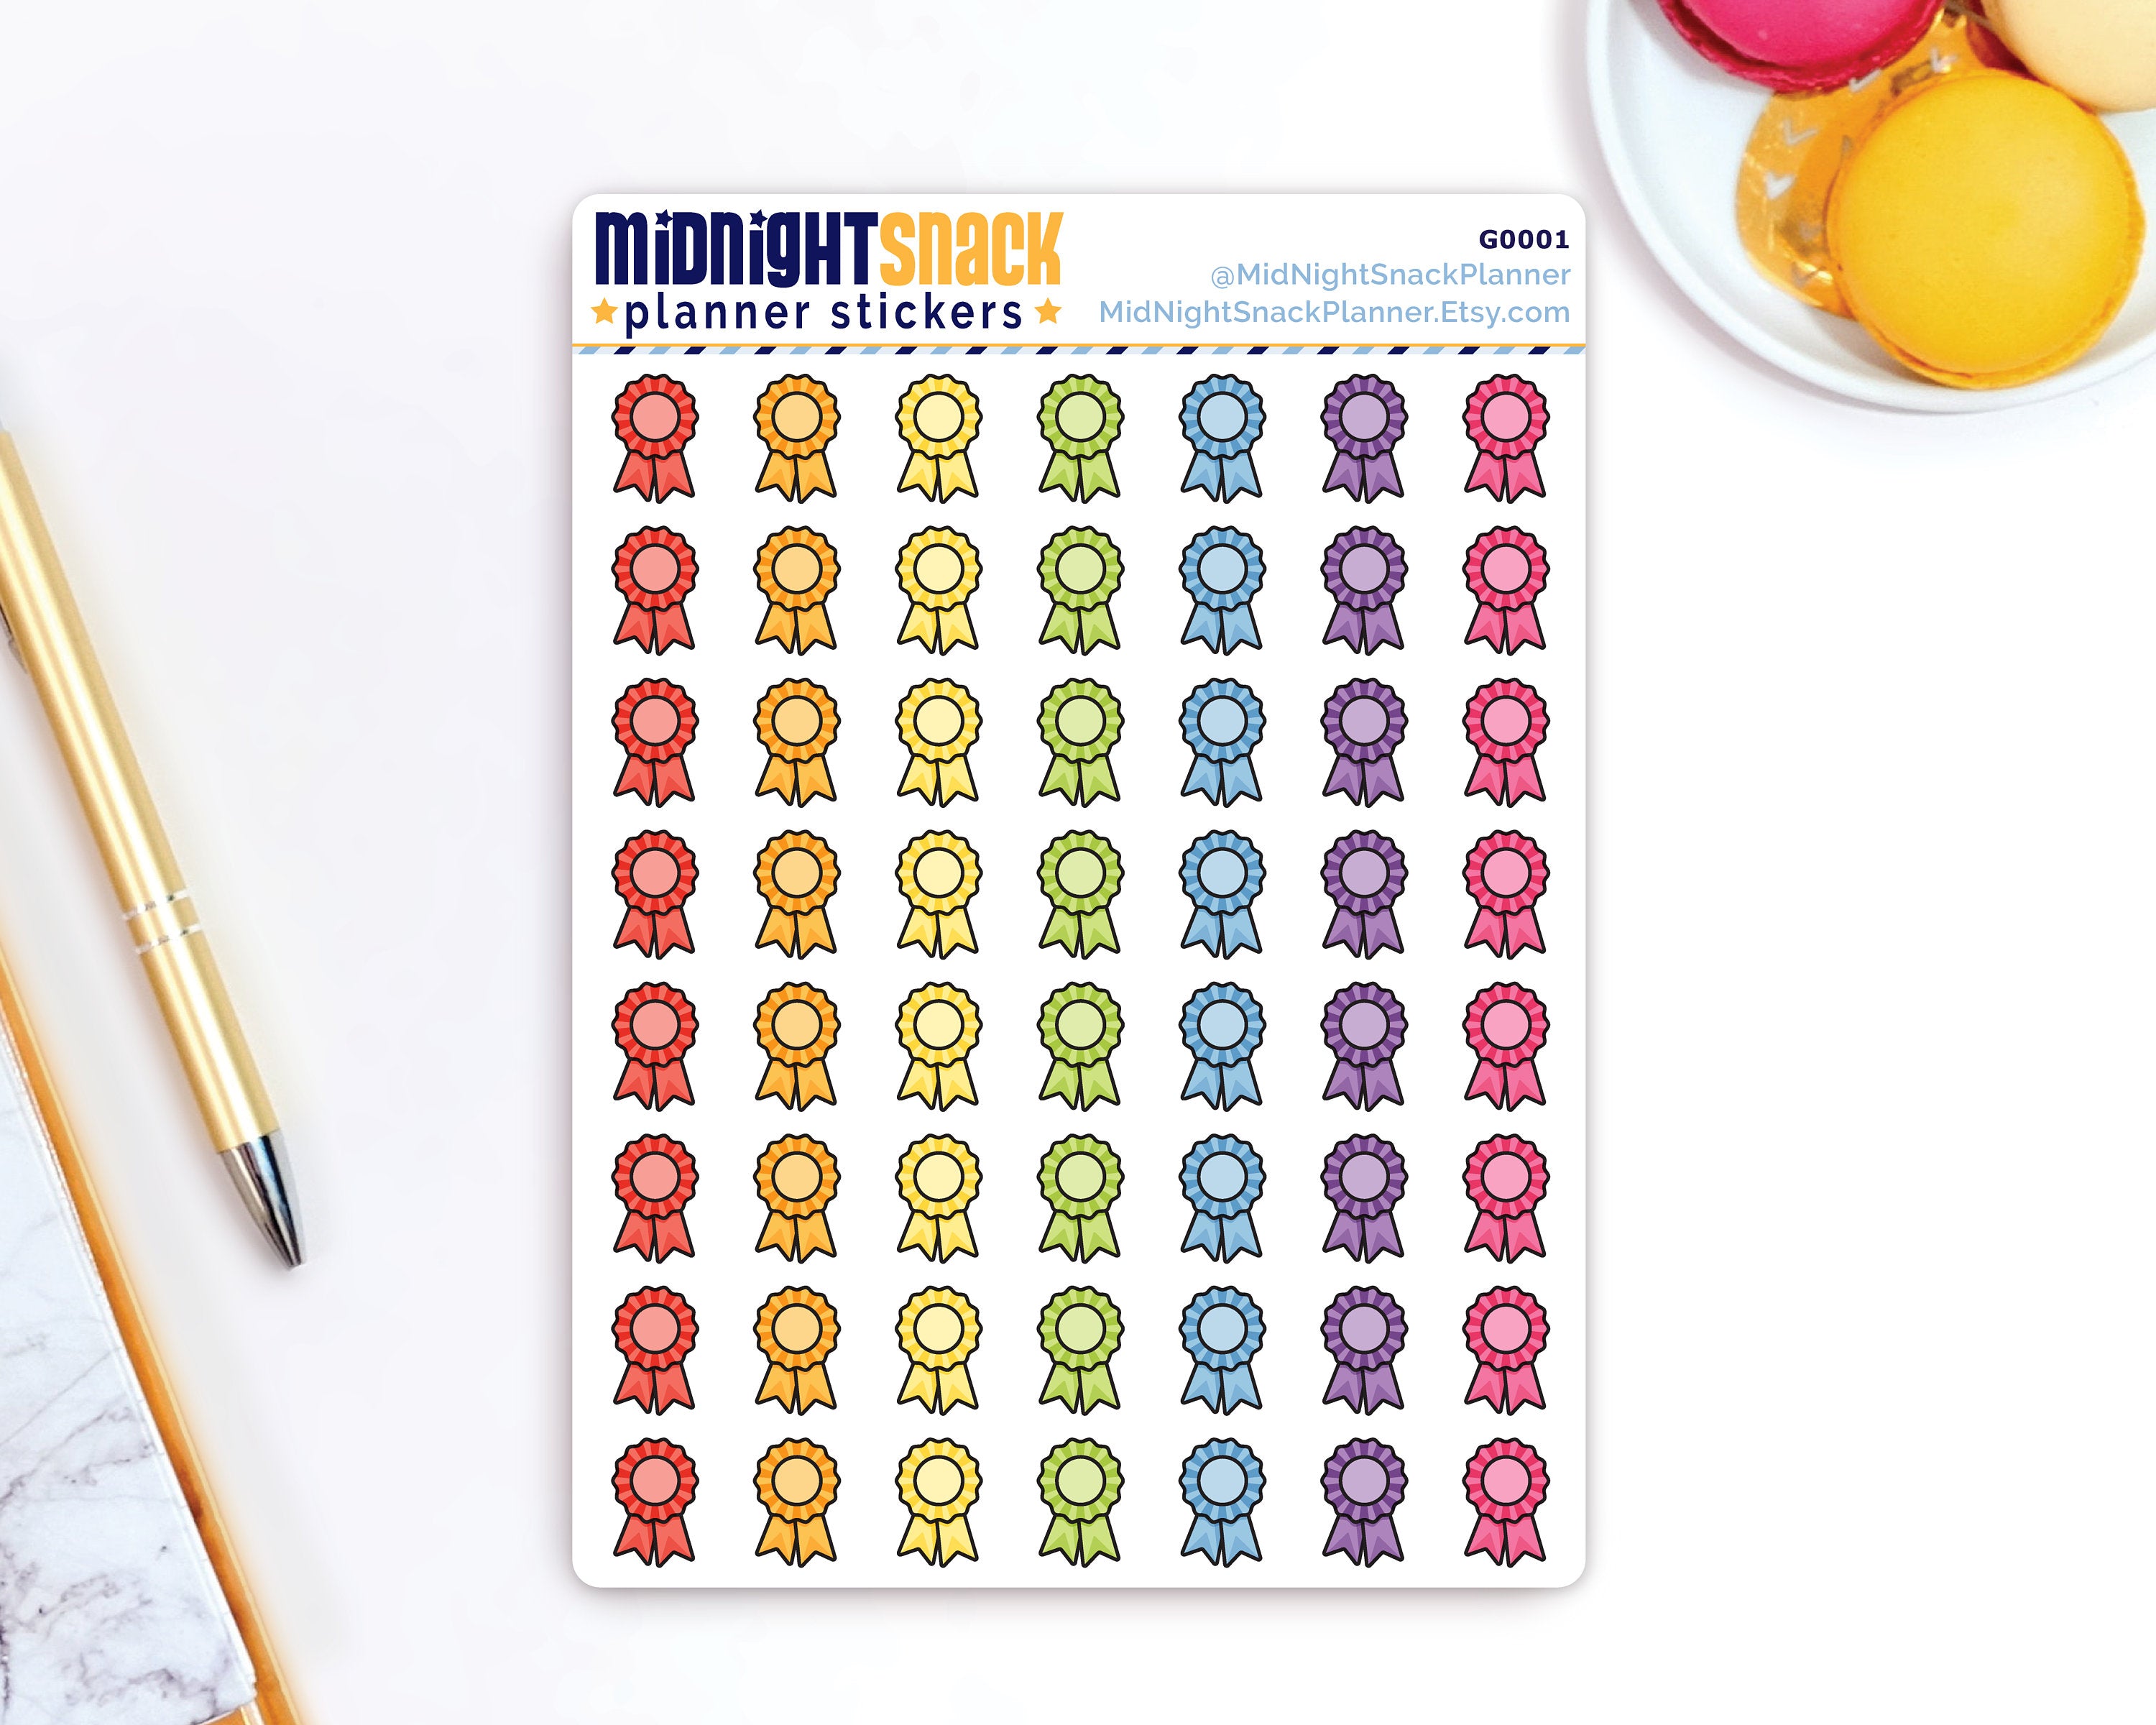 Award Ribbon Icon: Goal Achievement Planner Stickers Midnight Snack Planner